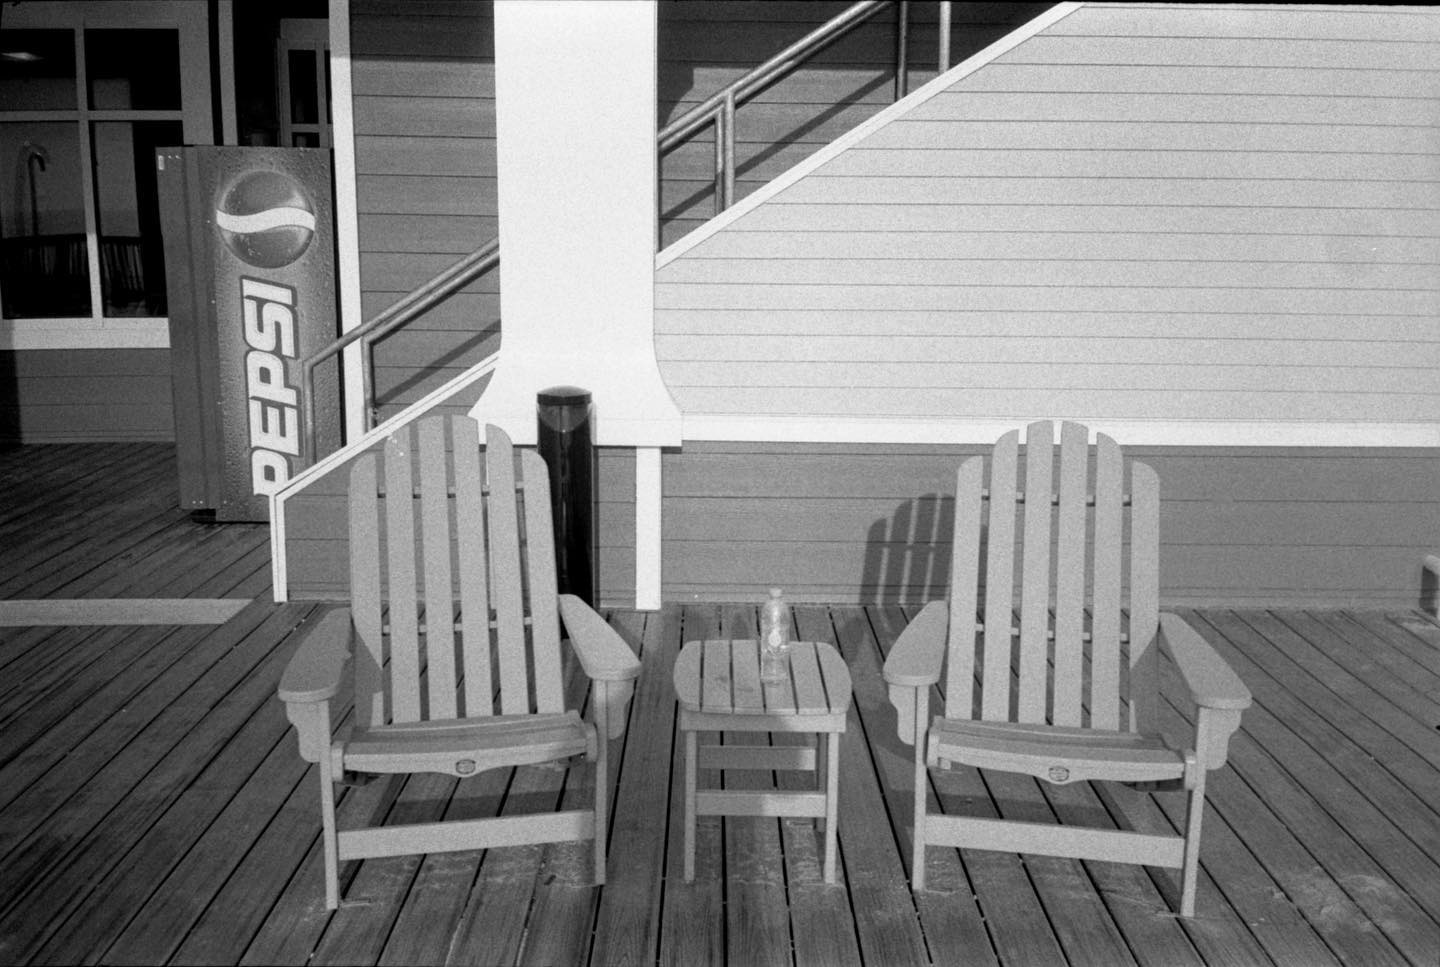 Adirondack Chairs. 
#olympusxa #superxx #rodinal #film #filmphotography #filmphotographic #staybrokeshootfilm